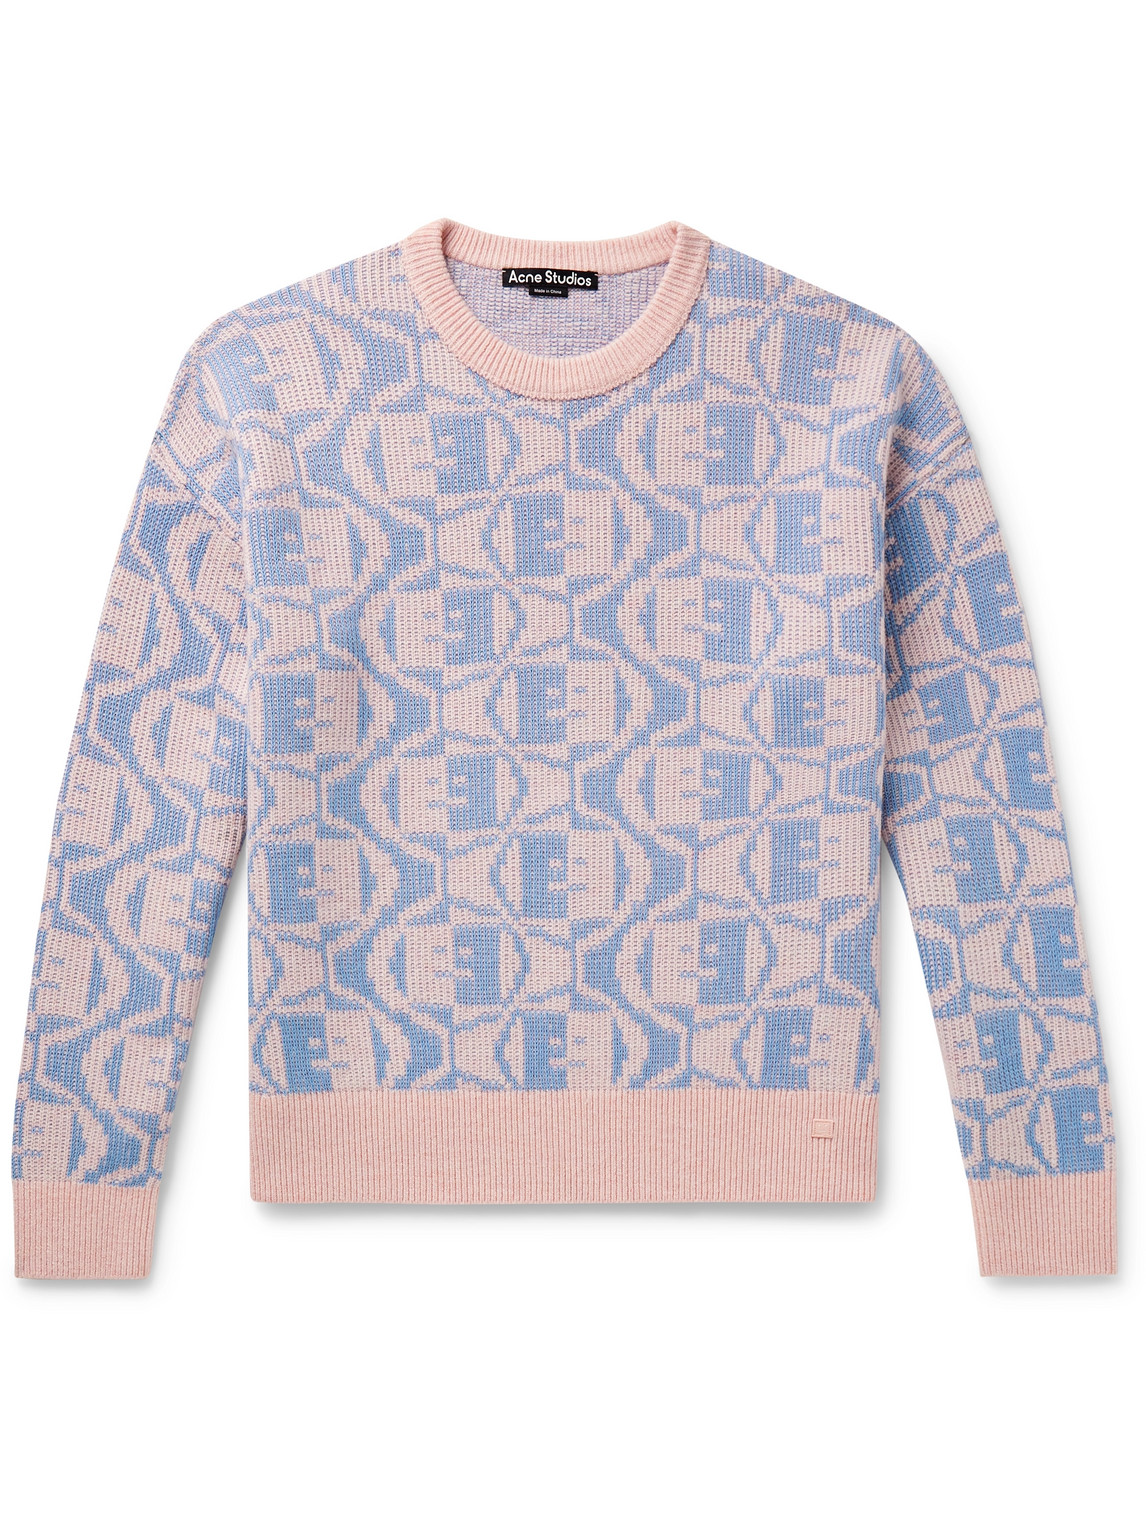 Acne Studios - Katch Jacquard-Knit Wool and Cotton-Blend Sweater - Men - Pink - XS von Acne Studios